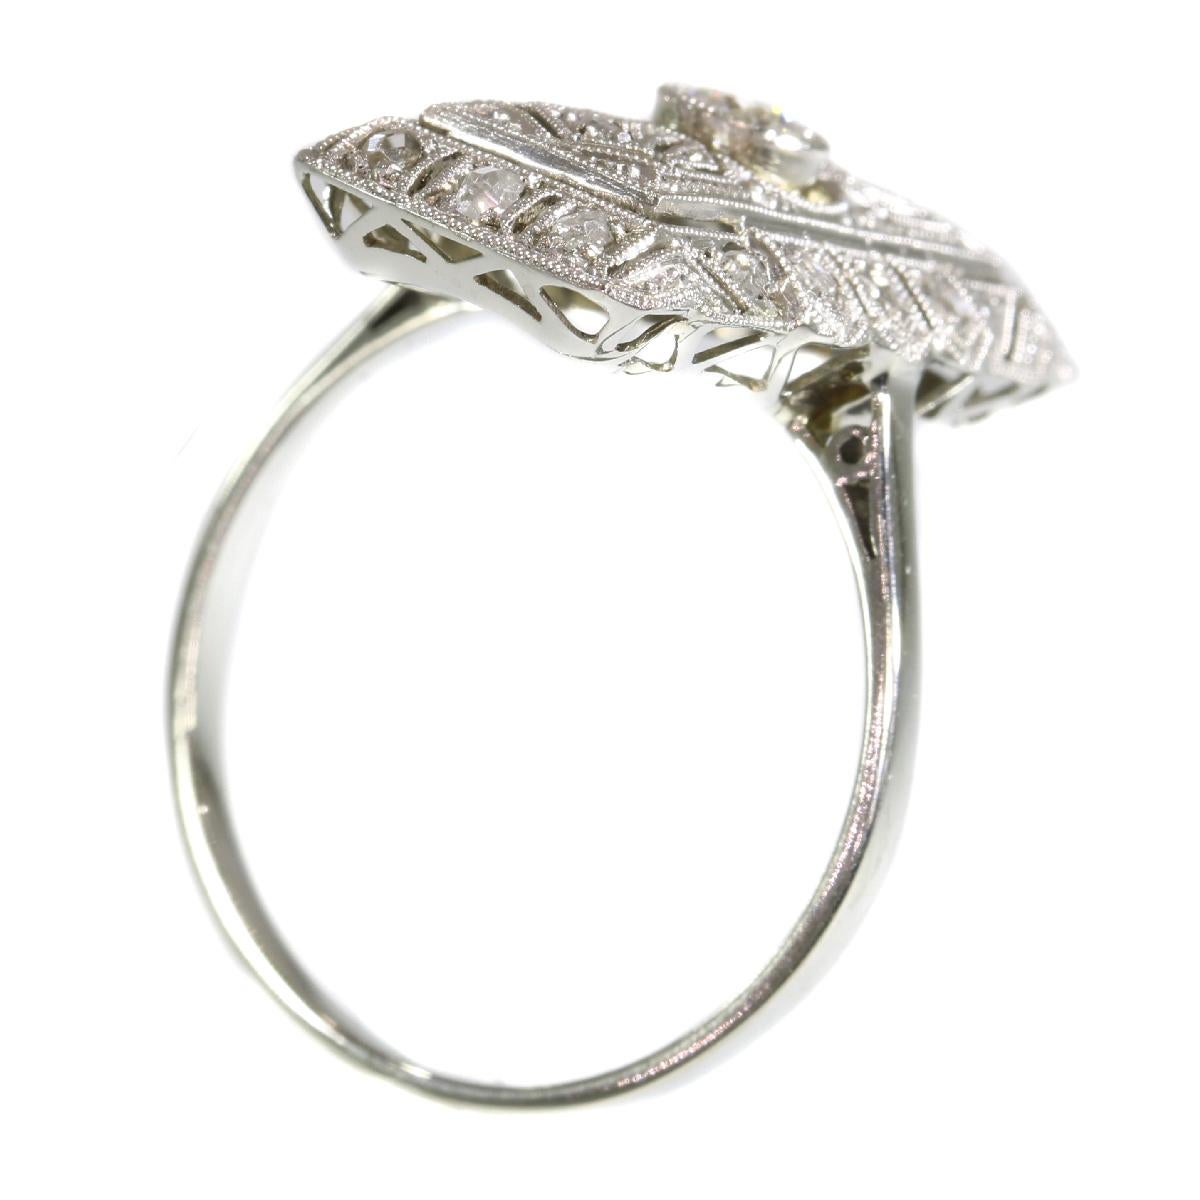  Edwardian Art Deco Diamond Engagement Ring For Sale 2